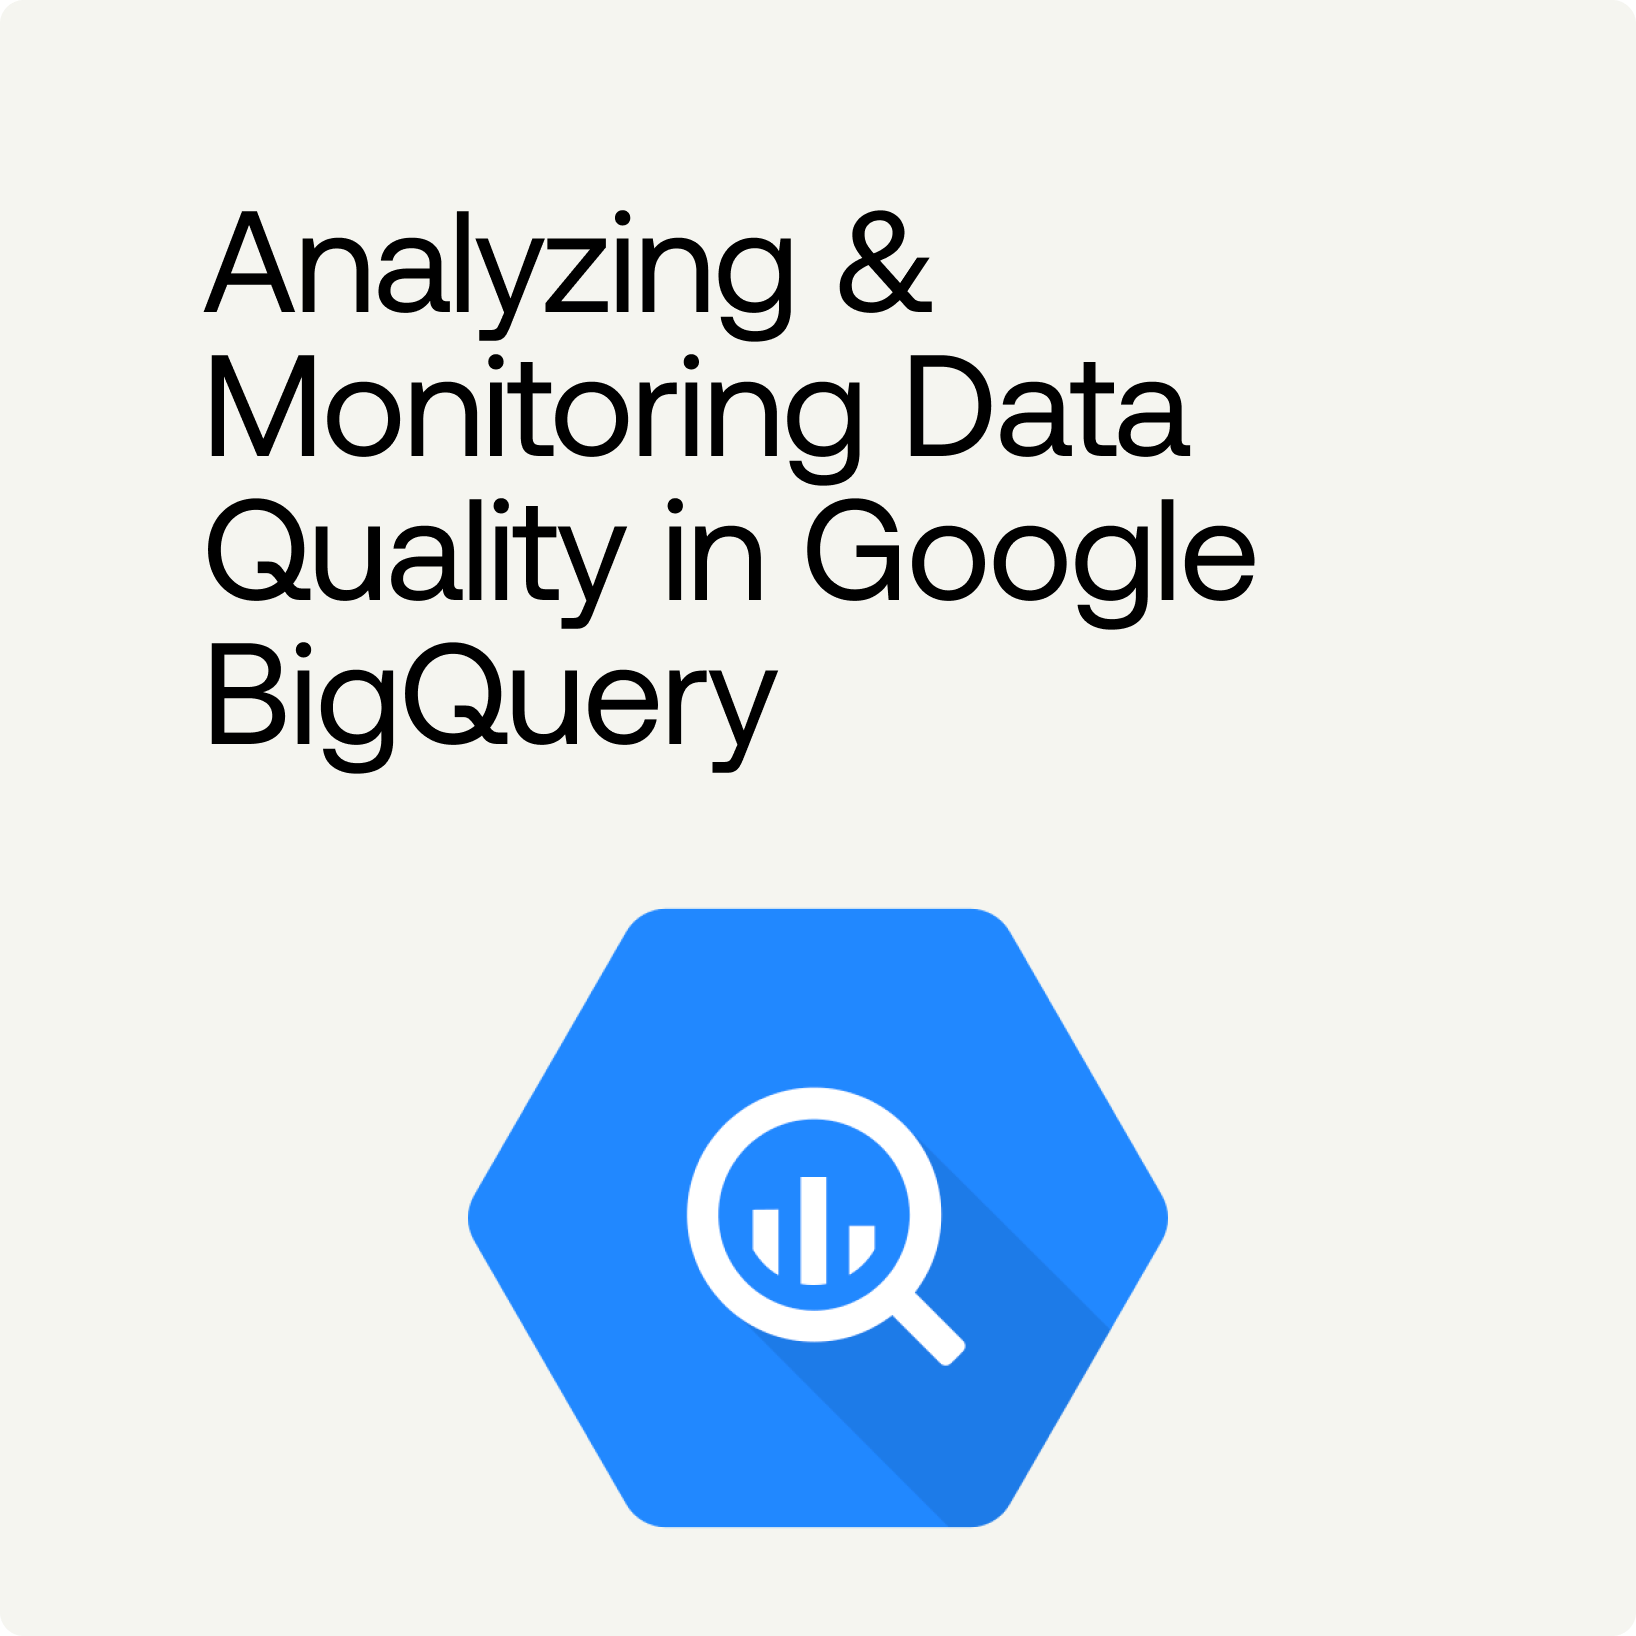 Data quality in Google BigQuery